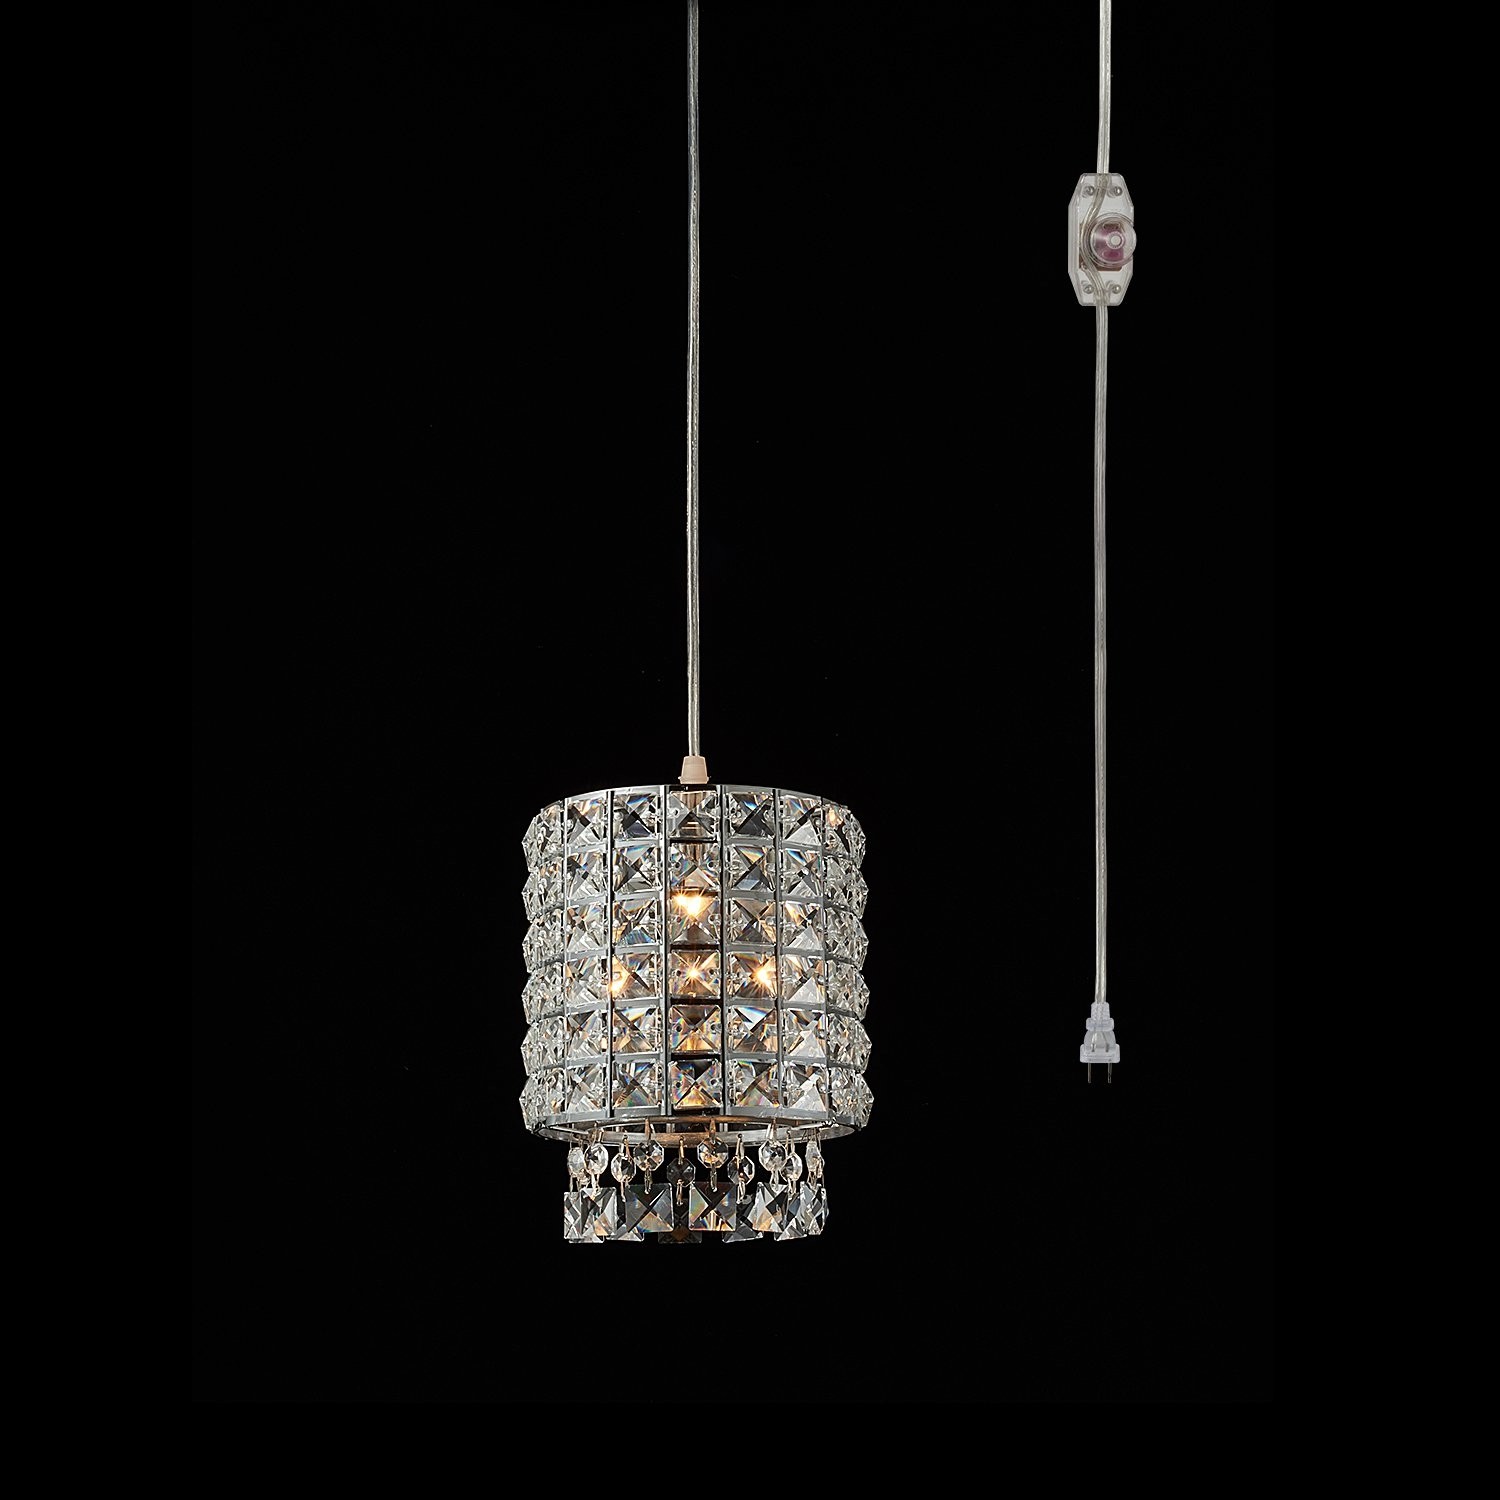 1 light portable hanging plug in pendant silver chandelier